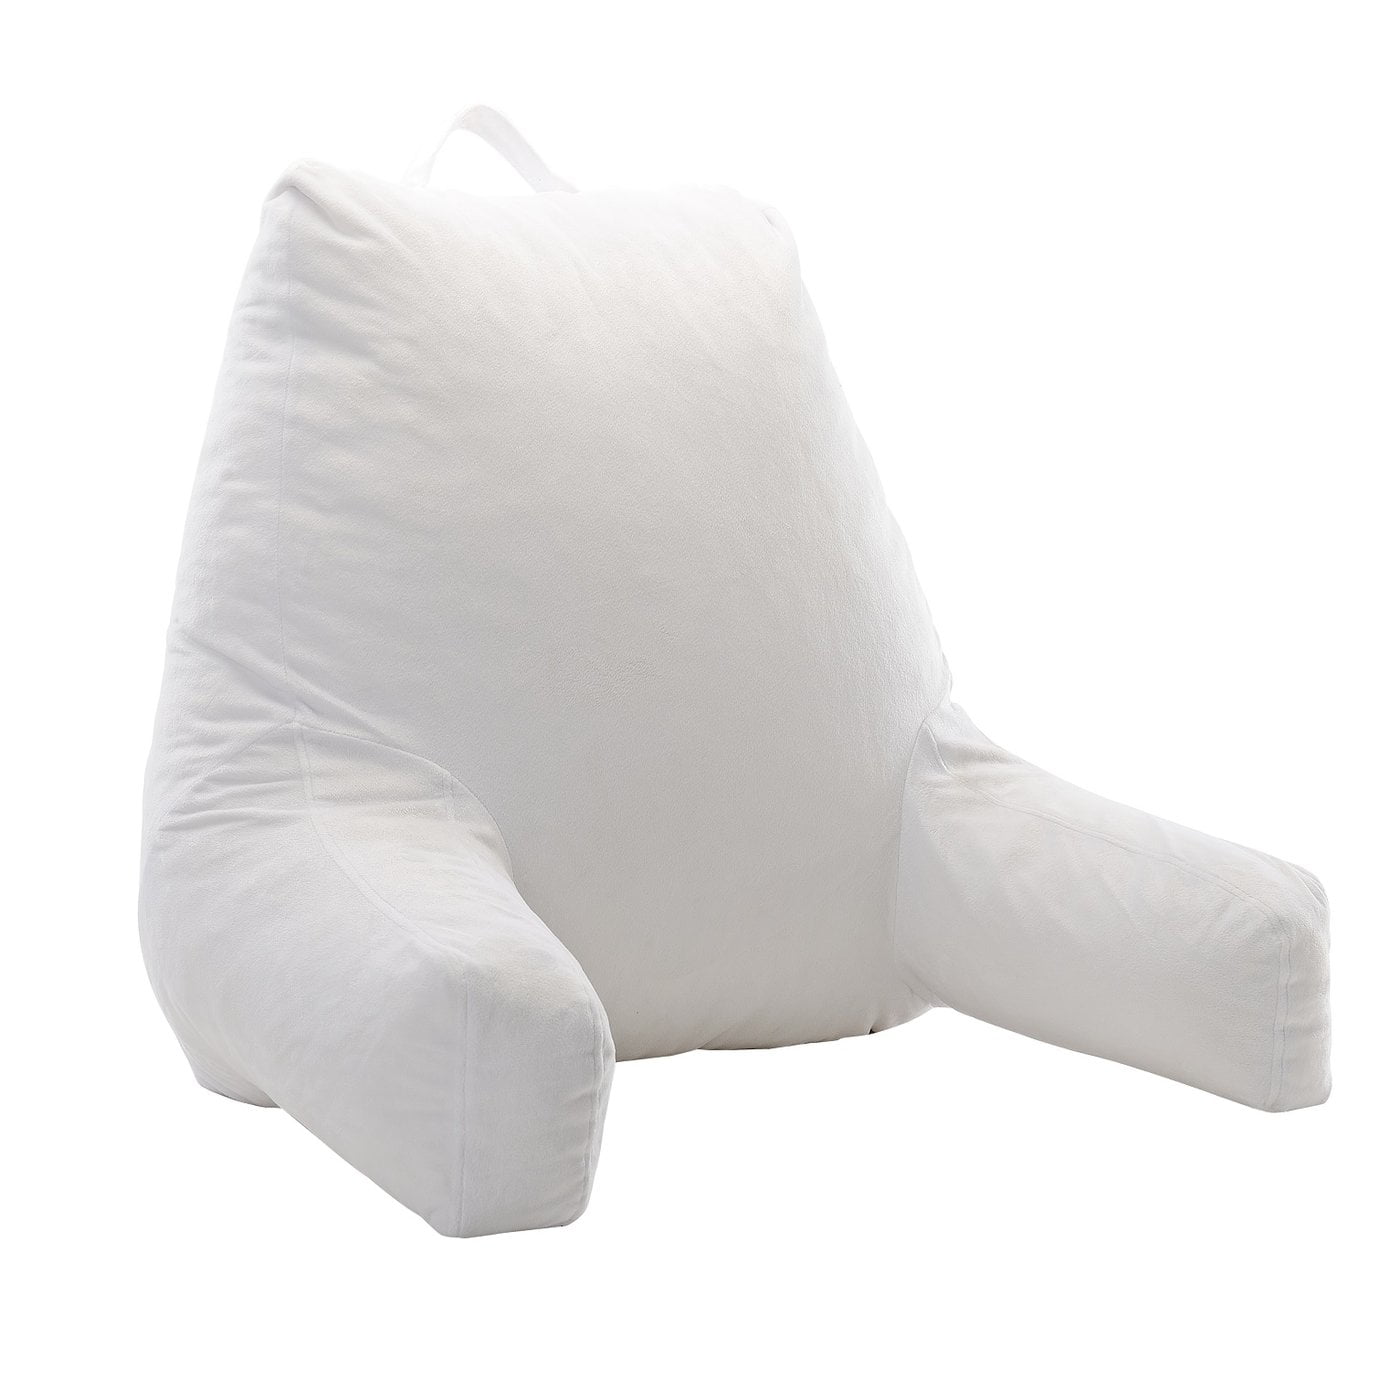 mainstays foam wedge pillow